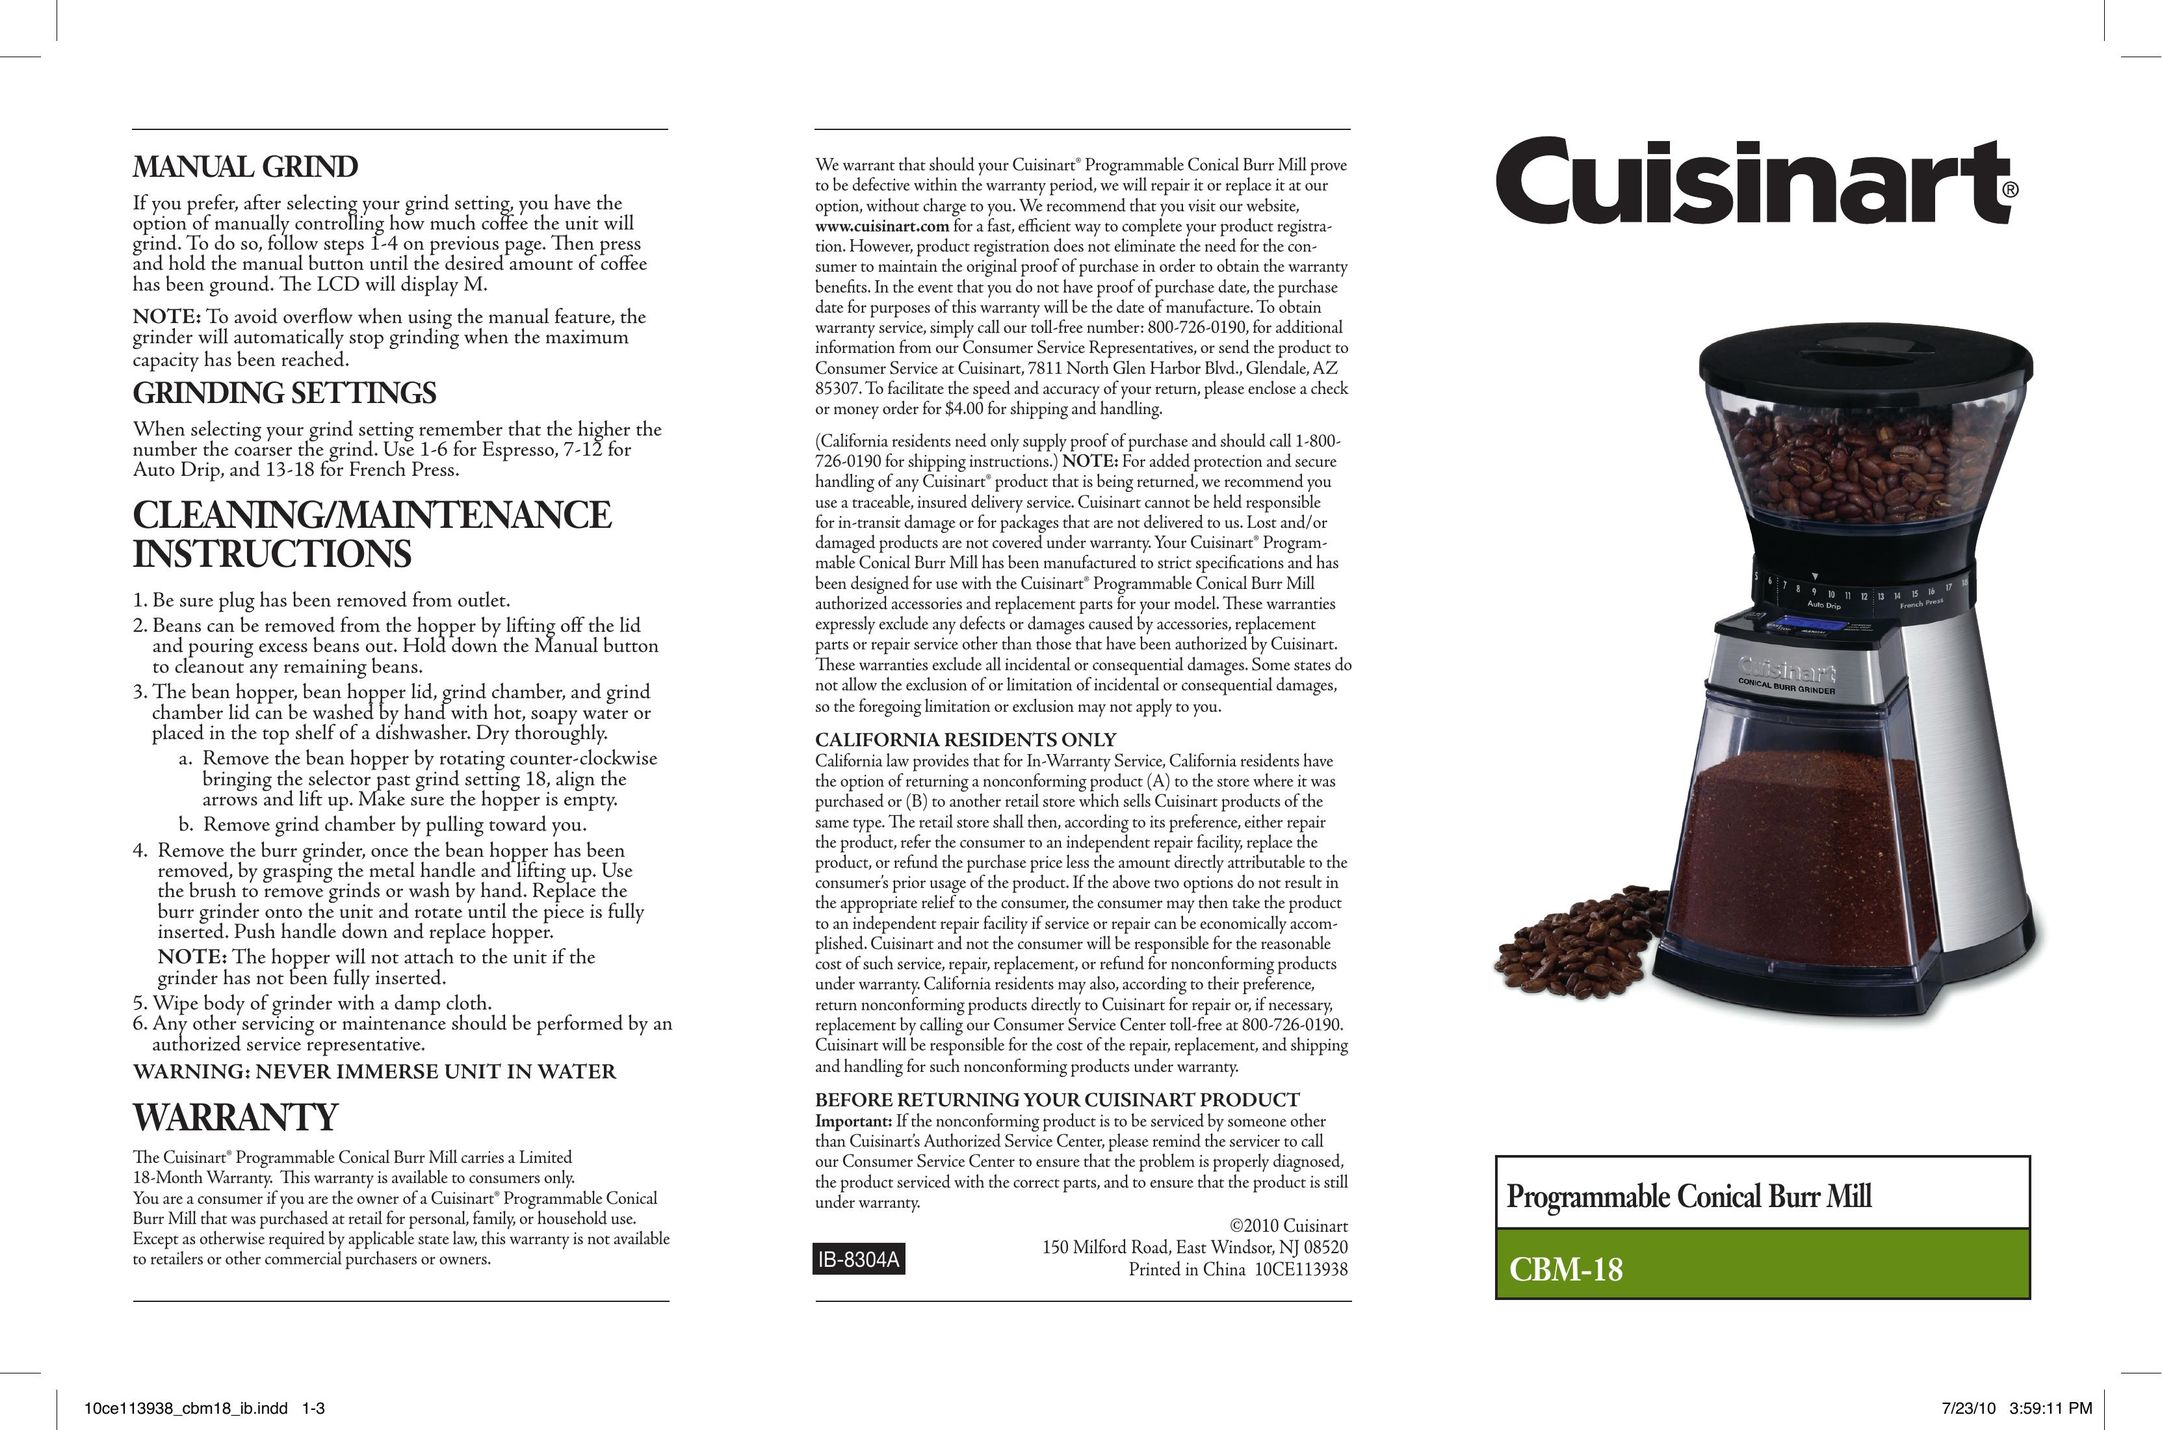 Cuisinart CBM-18 Coffeemaker User Manual